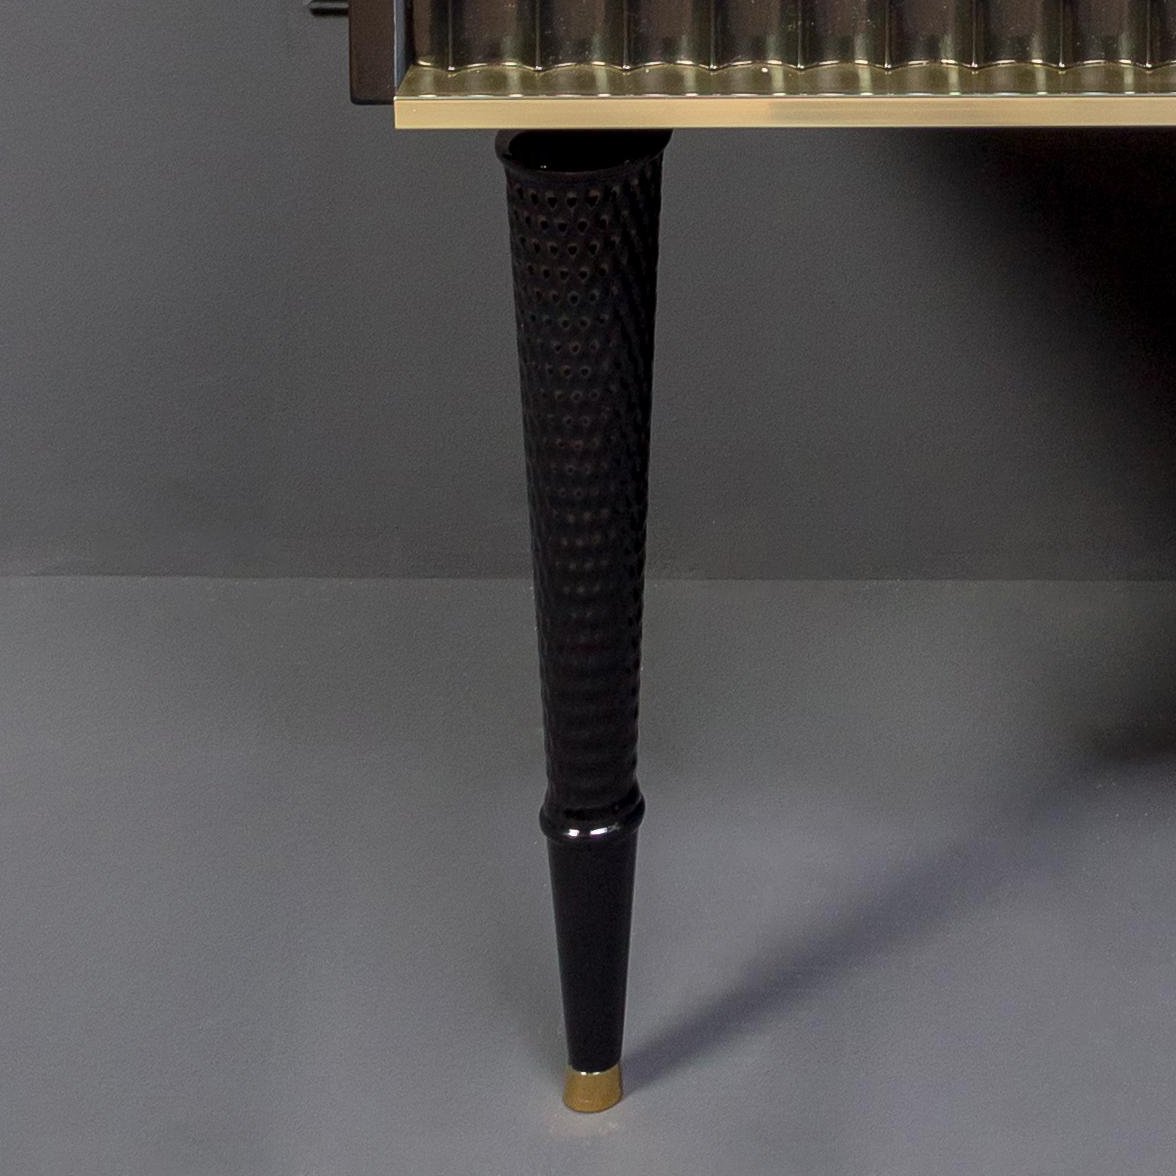 Ножки для мебели Armadi Art Vallessi Avangarde Denti 35 см, черные, 2 шт 847-B-35 - 0